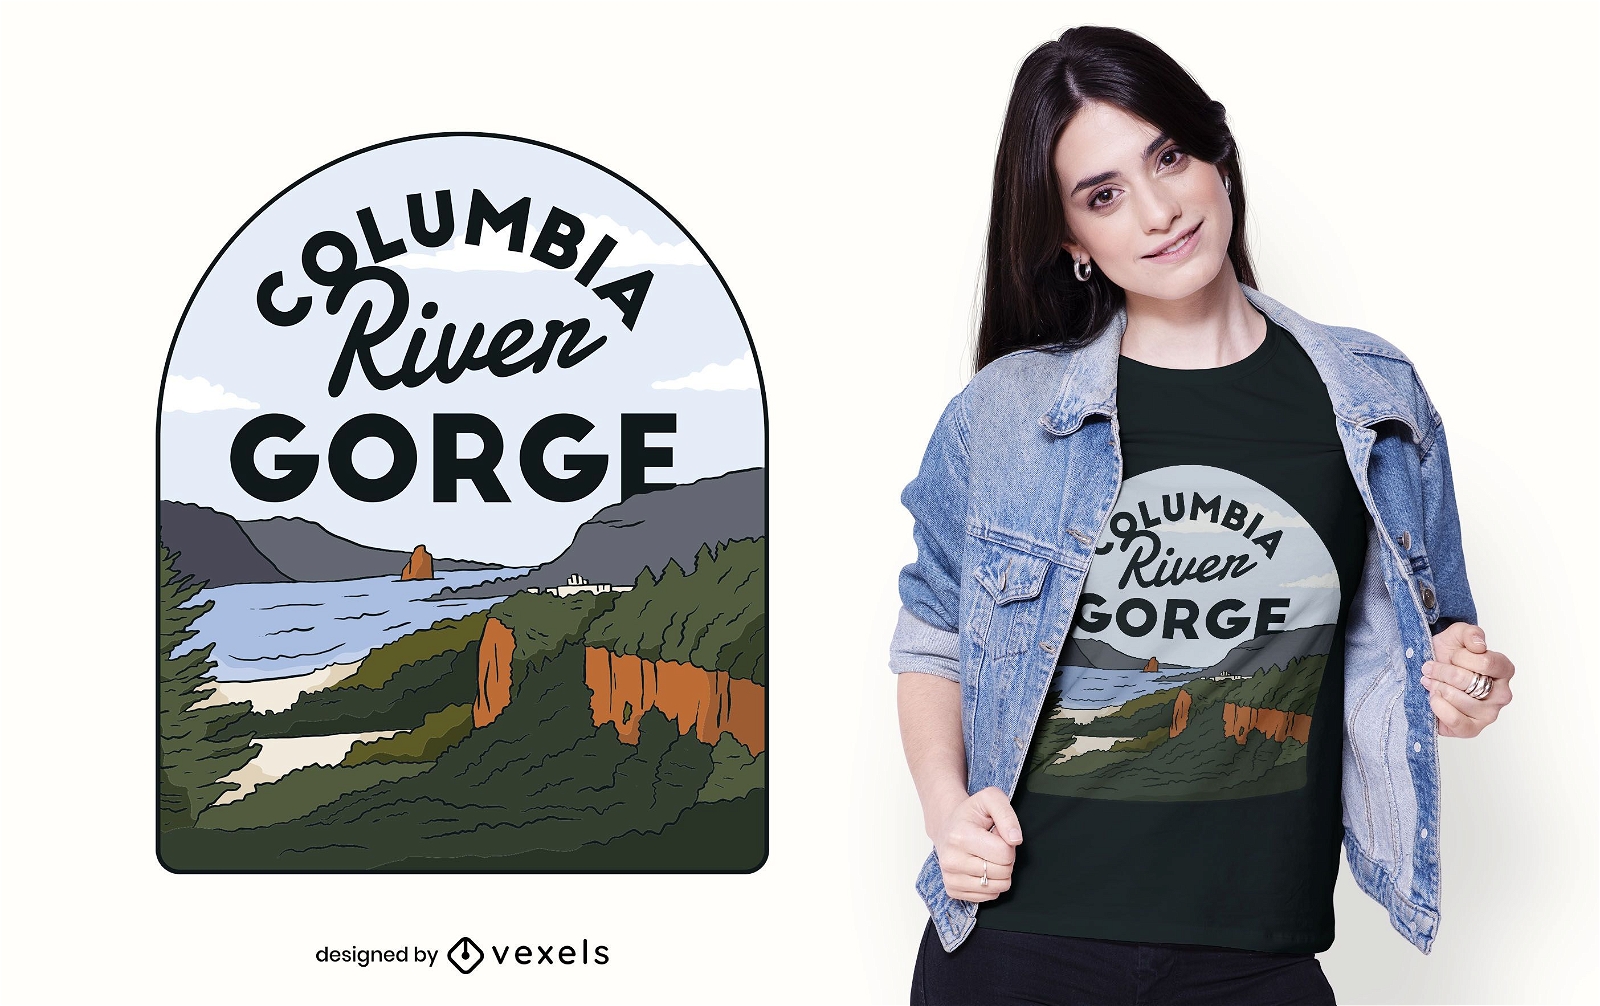 Columbia River Gorge T-Shirt Design